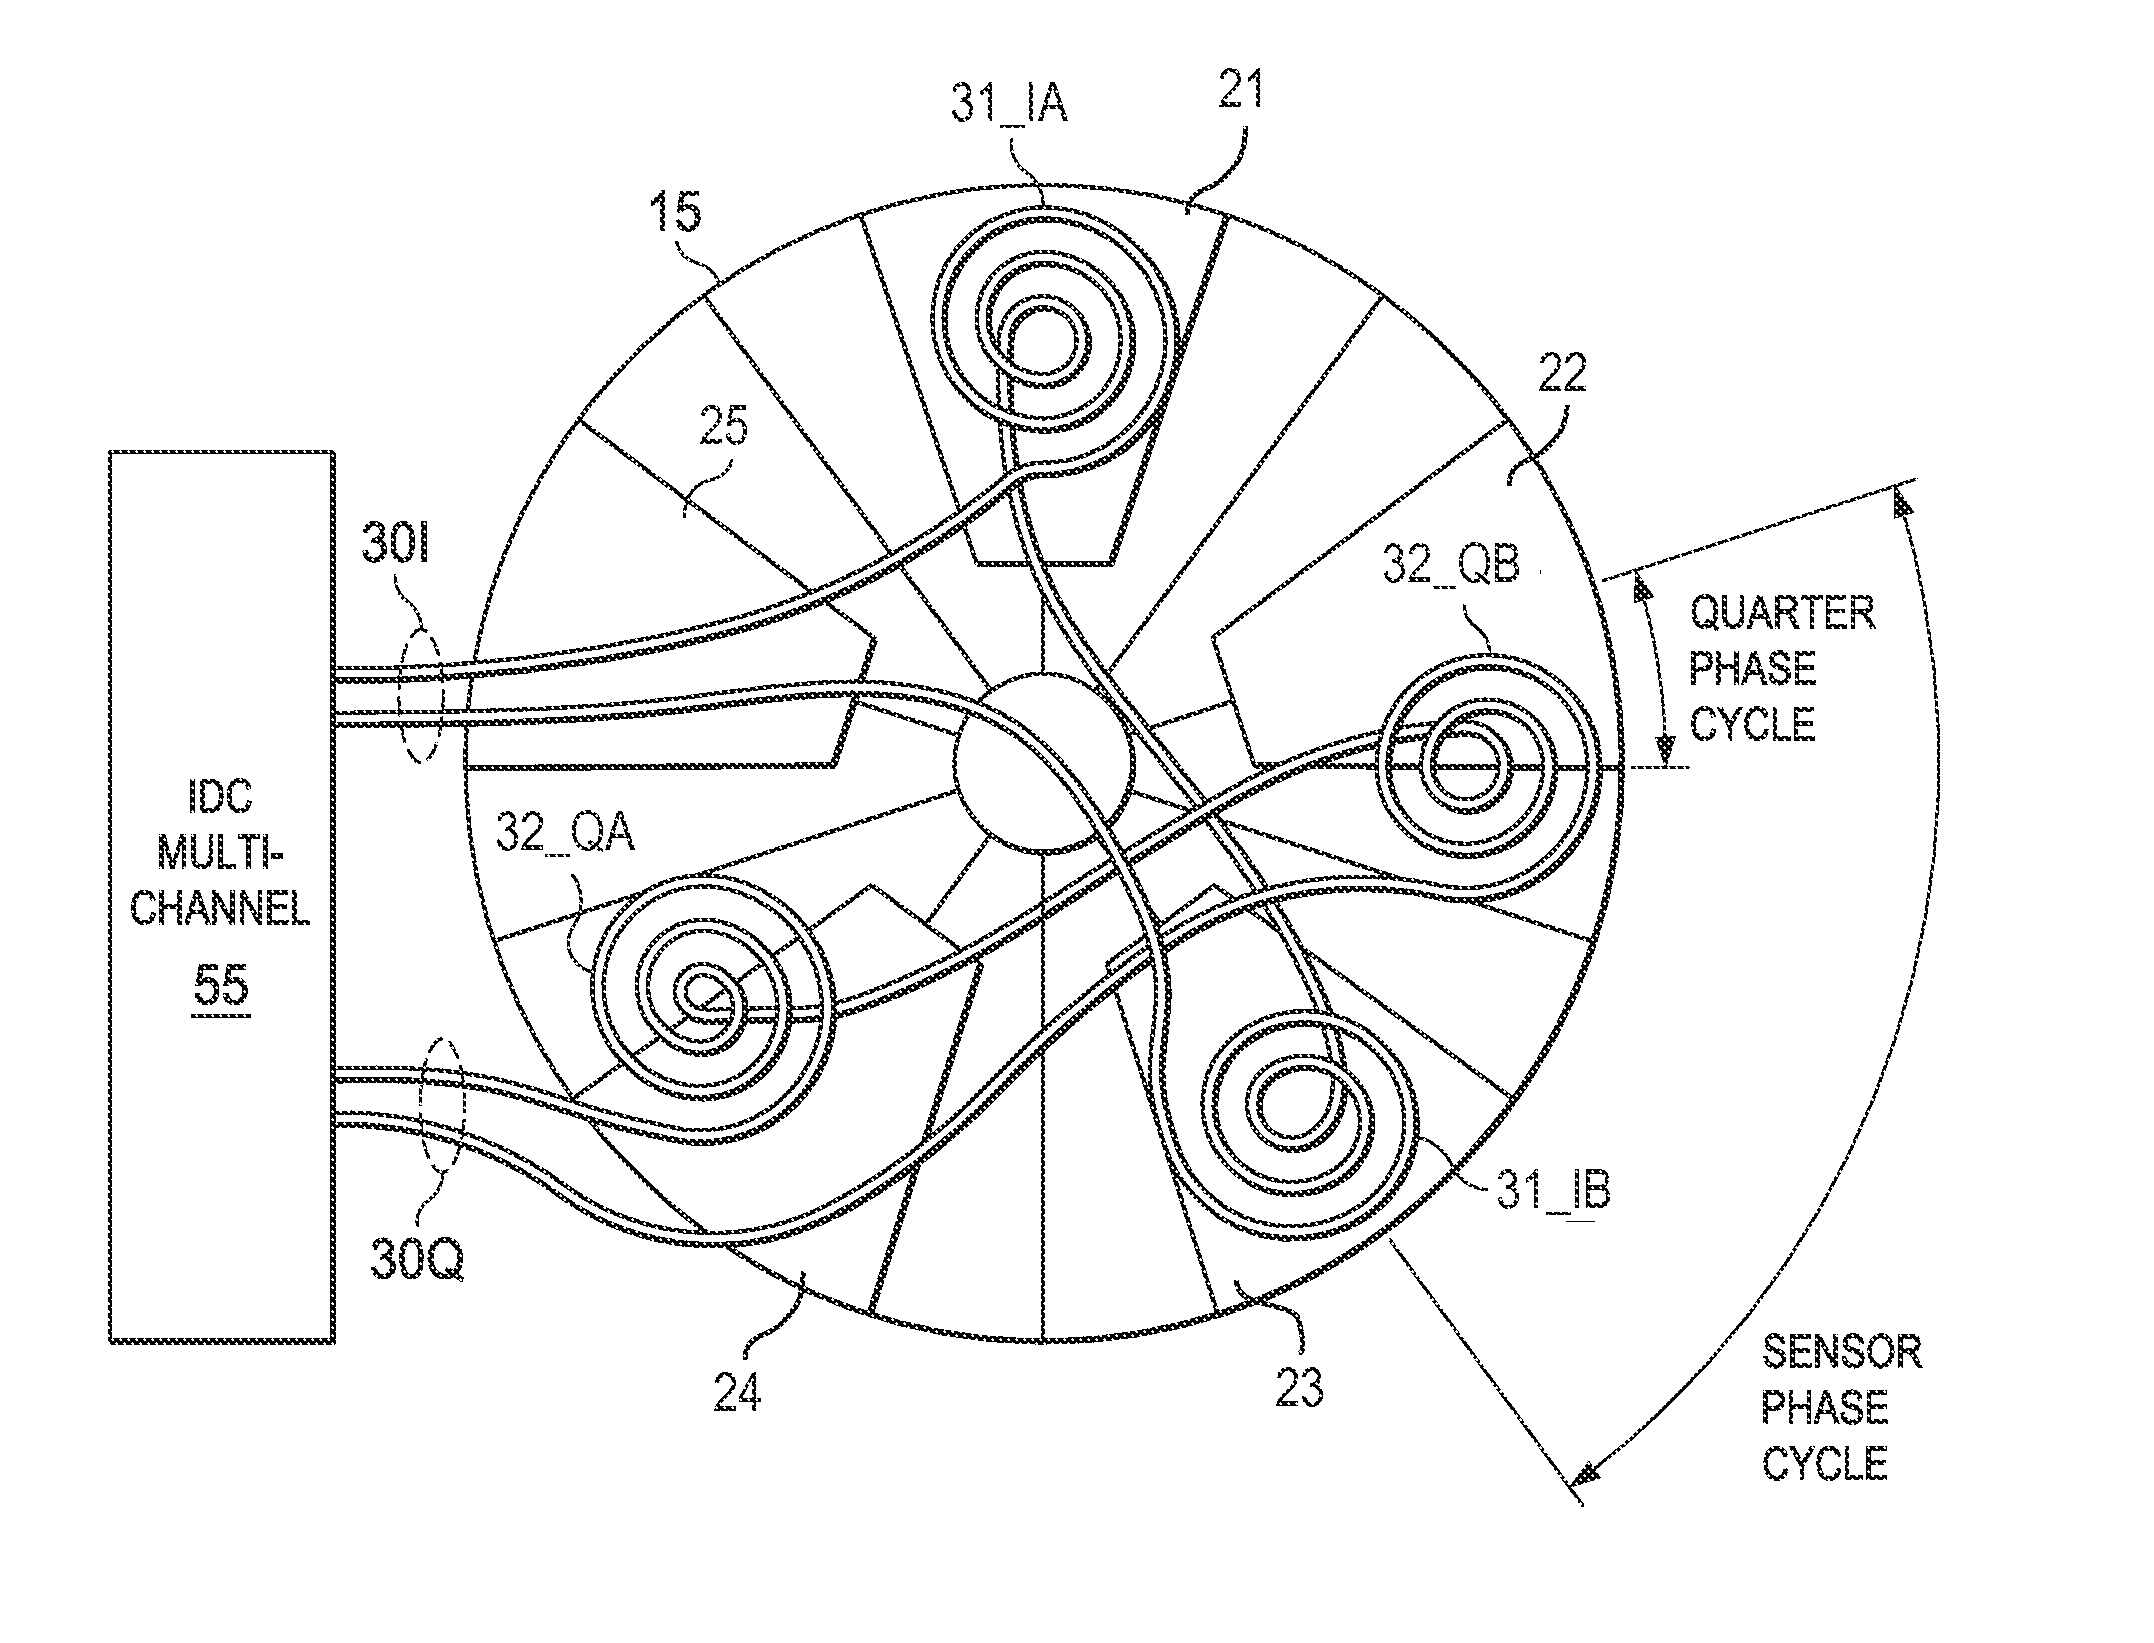 Rotational sensing with inductive sensor and rotating axial target surface